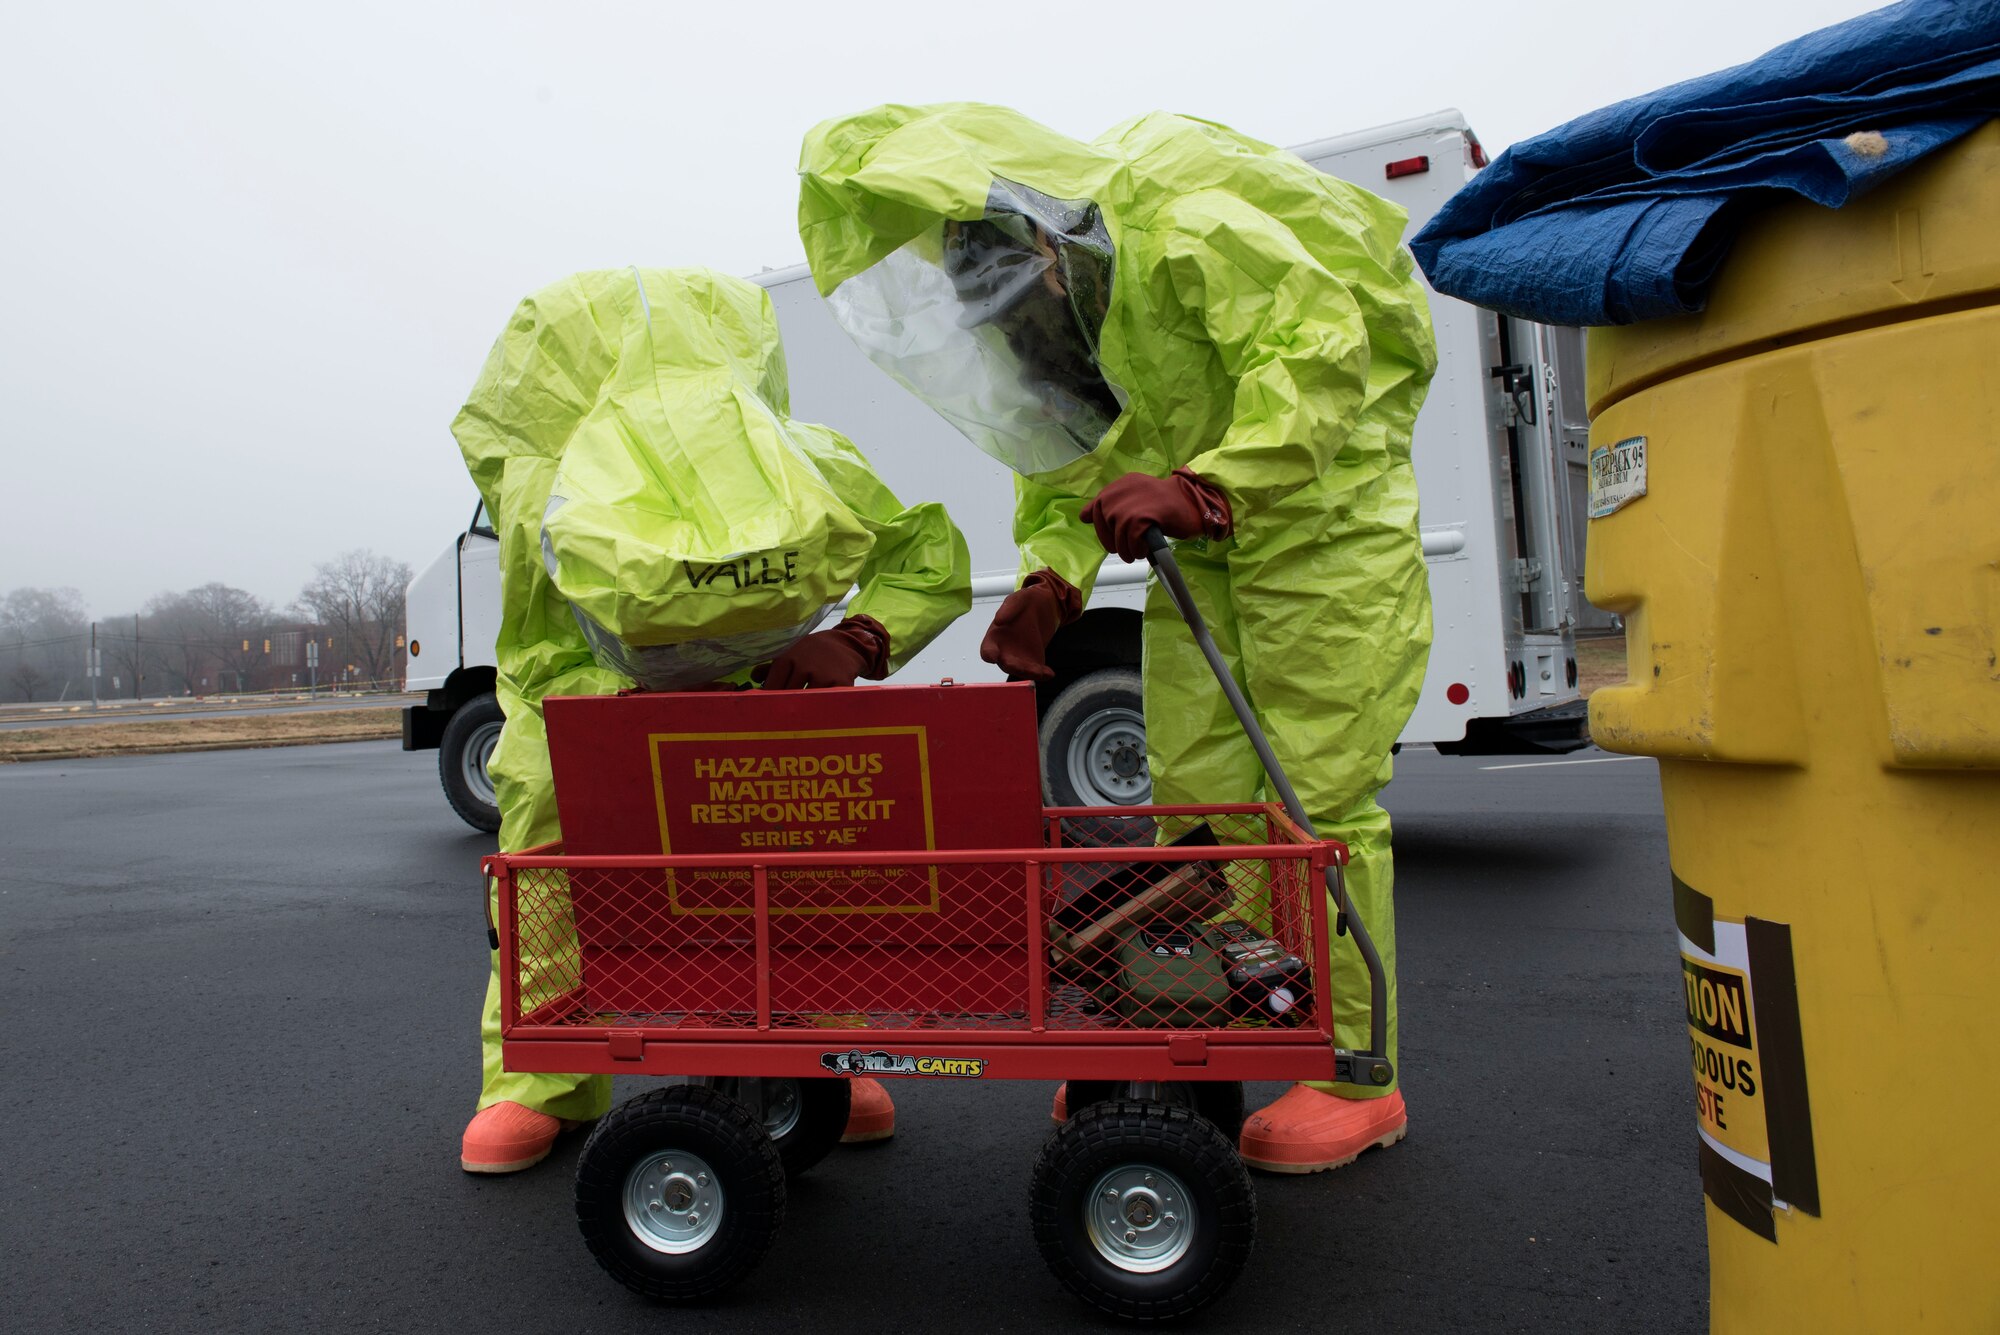 Members of the 4th Civil Engineer Squadron emergency management team, conduct hazardous material response procedures during a HAZMAT Spill Response exercise, Dec. 9, 2019, in Goldsboro, N.C.